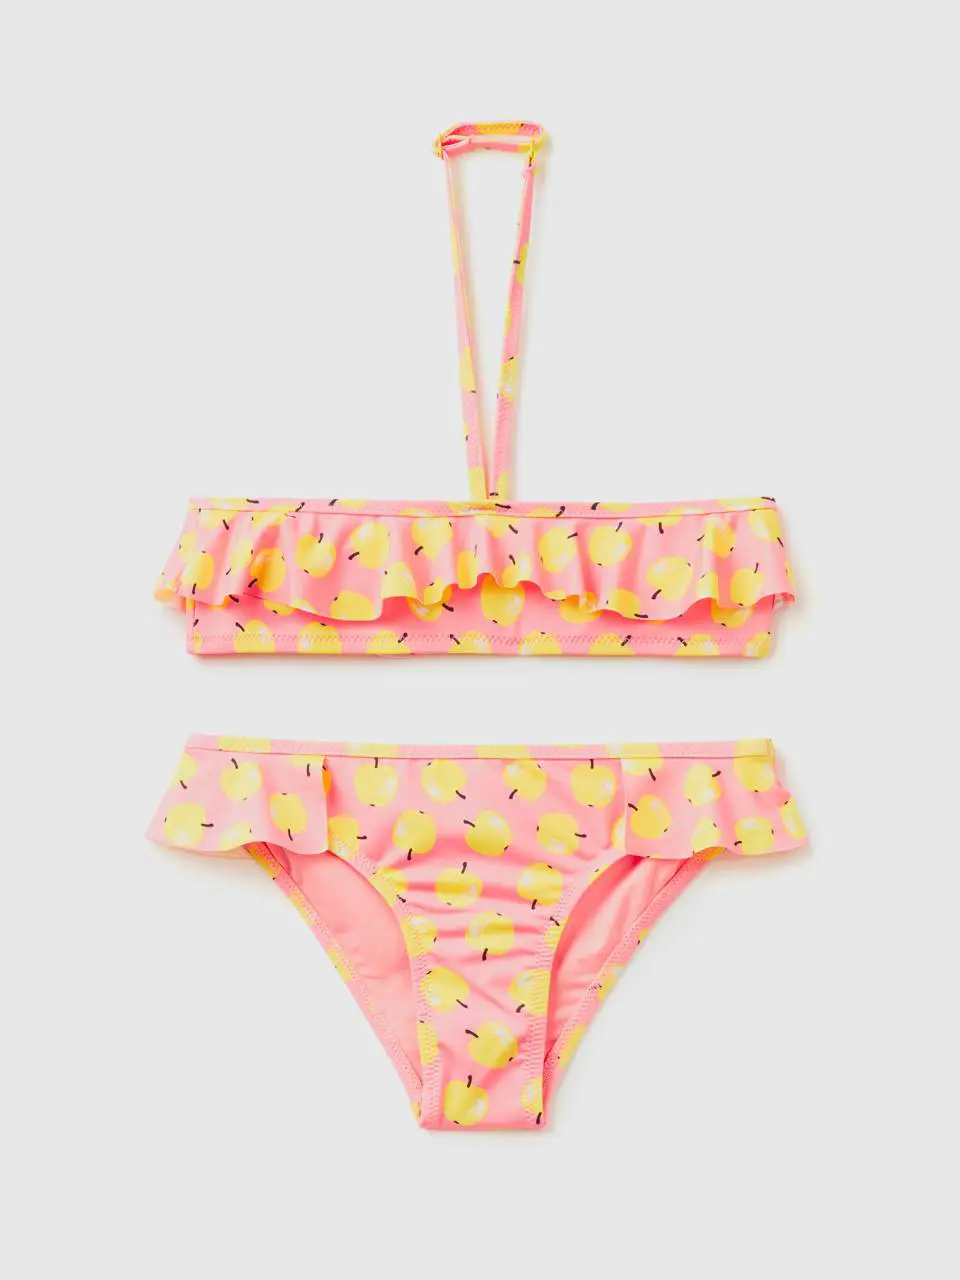 Benetton pink bikini with apple pattern. 1